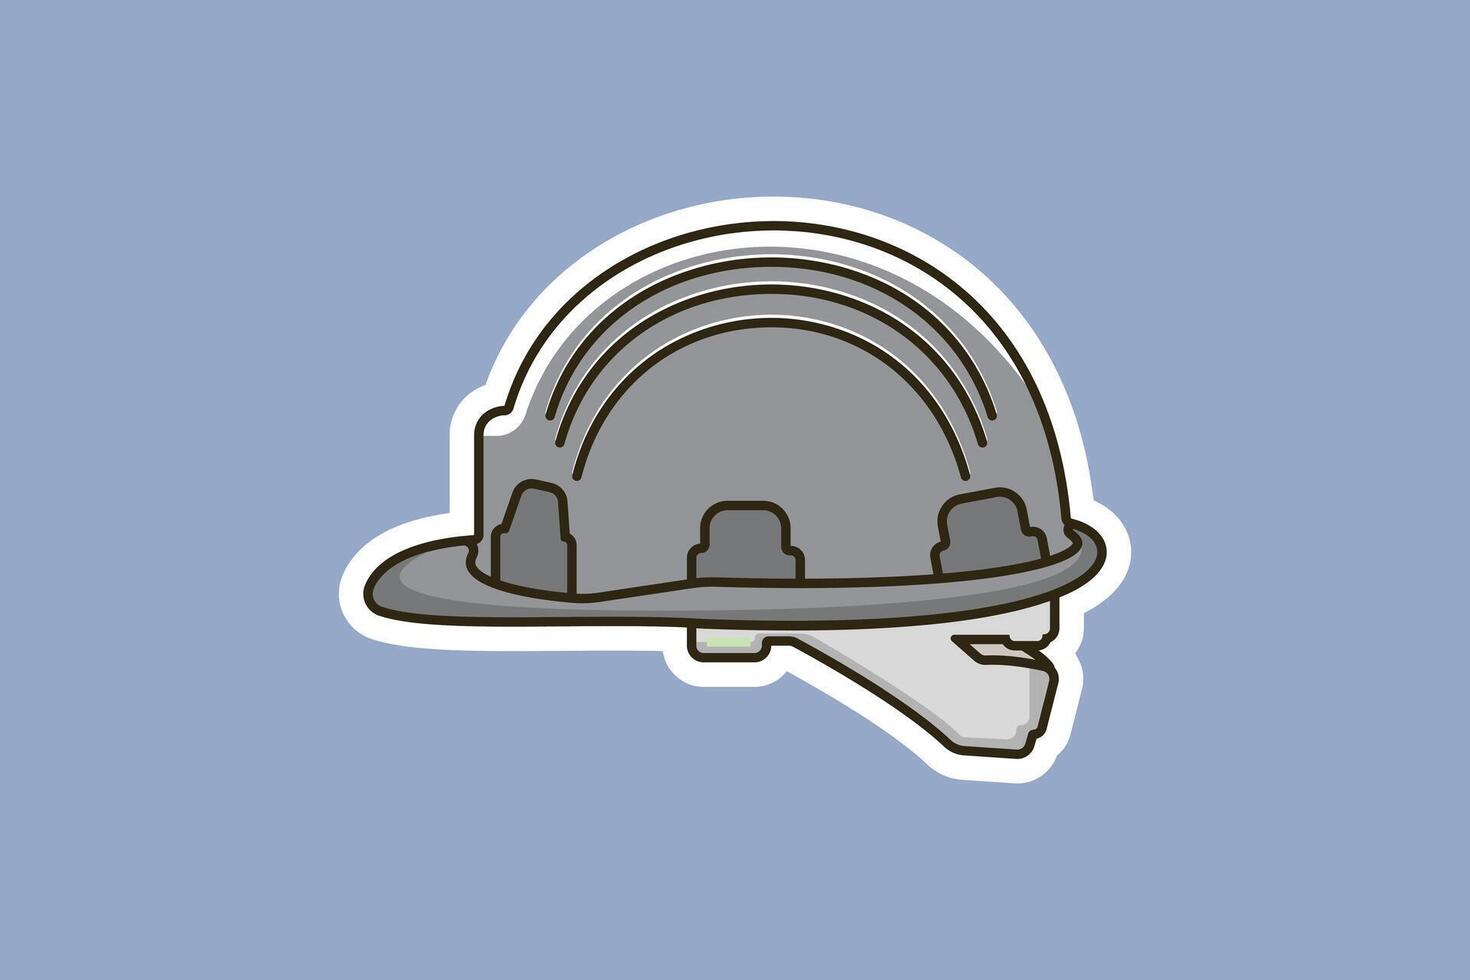 Builder Safety Helmet Sticker vector illustration. Head protective equipment object icon concept. Construction plastic helmet sticker design logo.